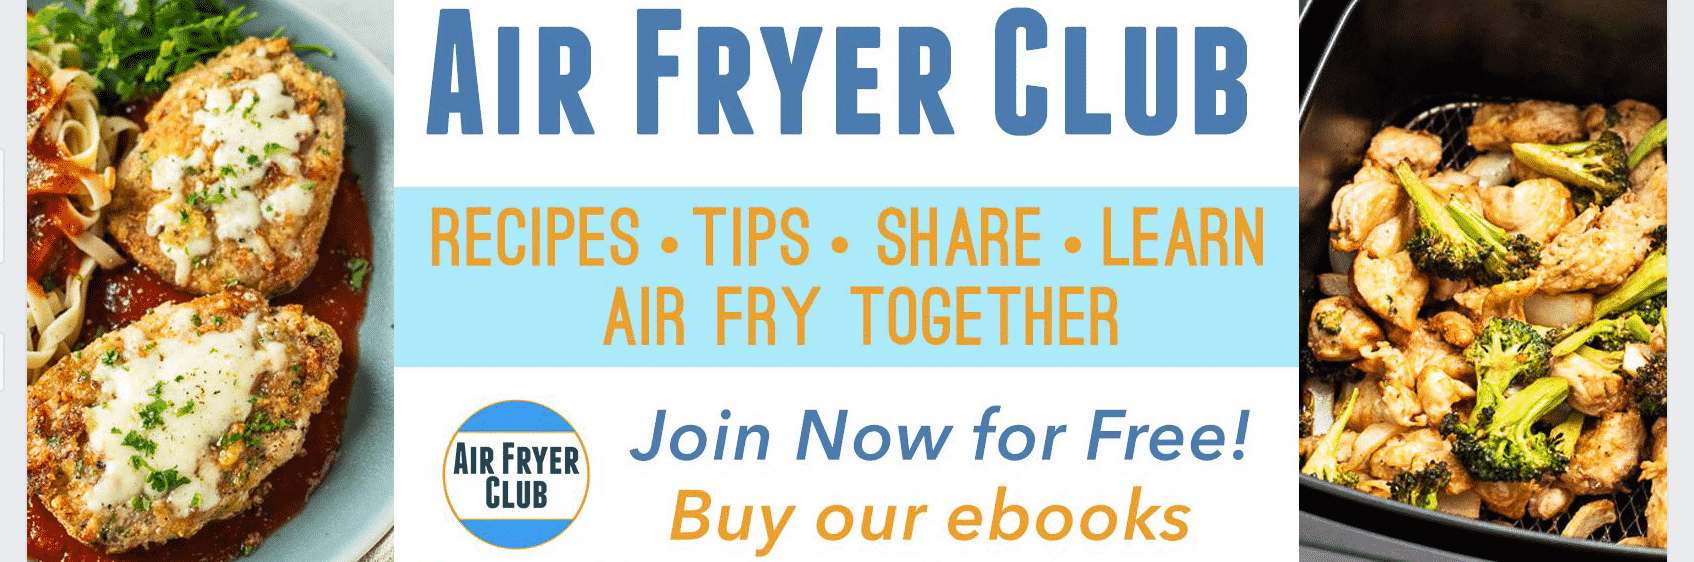 Facebook Air Fryer Club by BestRecipeBox.com